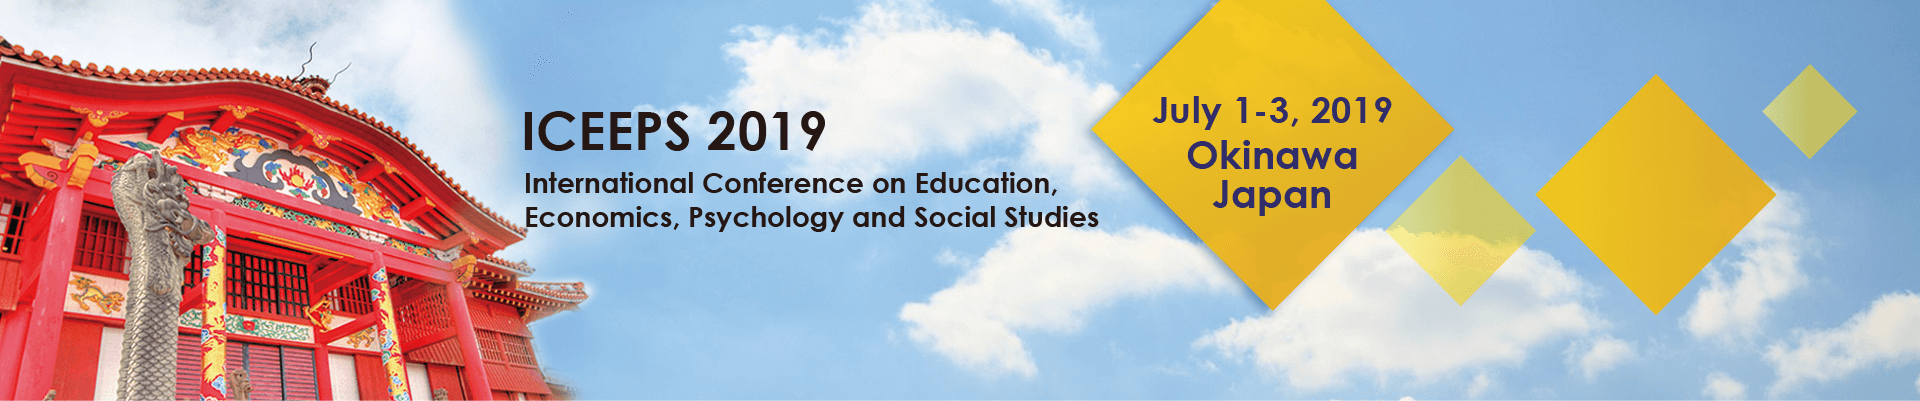 2019 ICEEPS International Conference on Education, Economics, Psychology and Social Studies, Okinawa, Japan